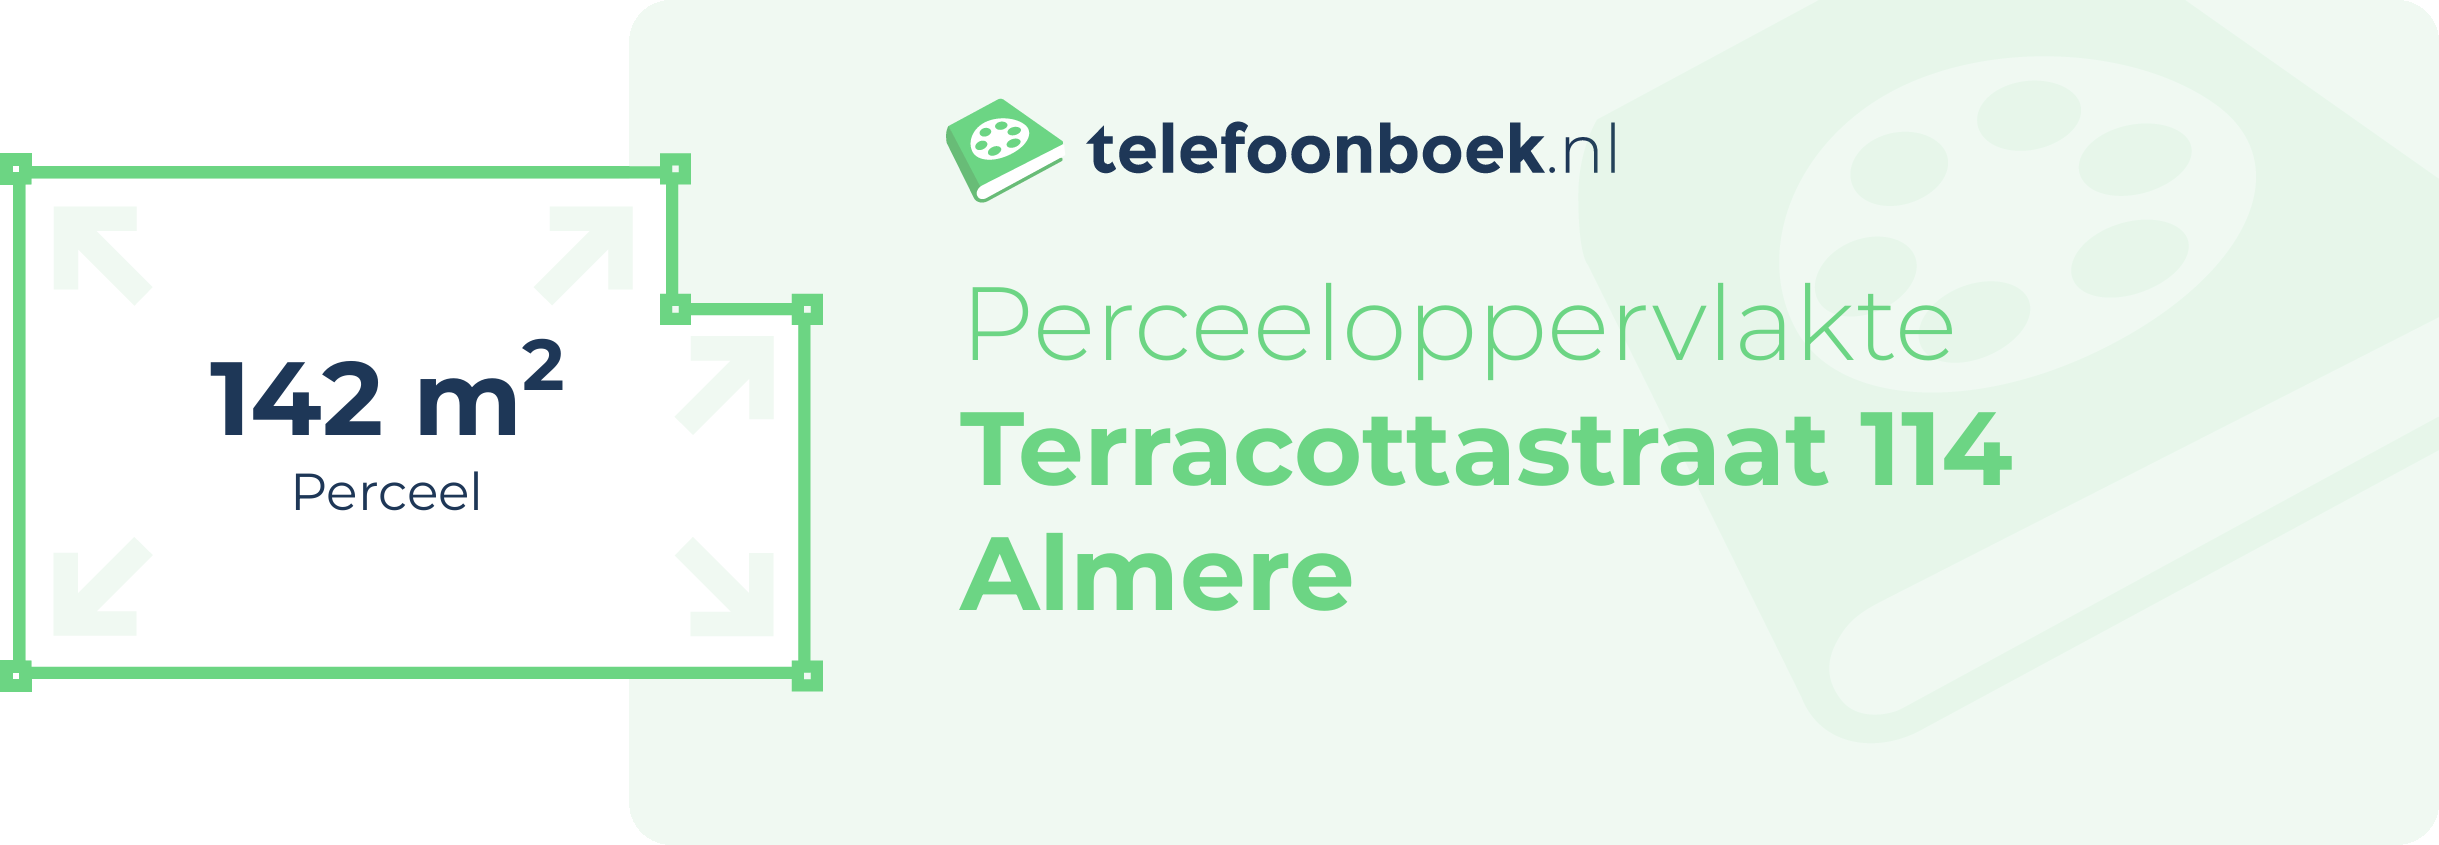 Perceeloppervlakte Terracottastraat 114 Almere